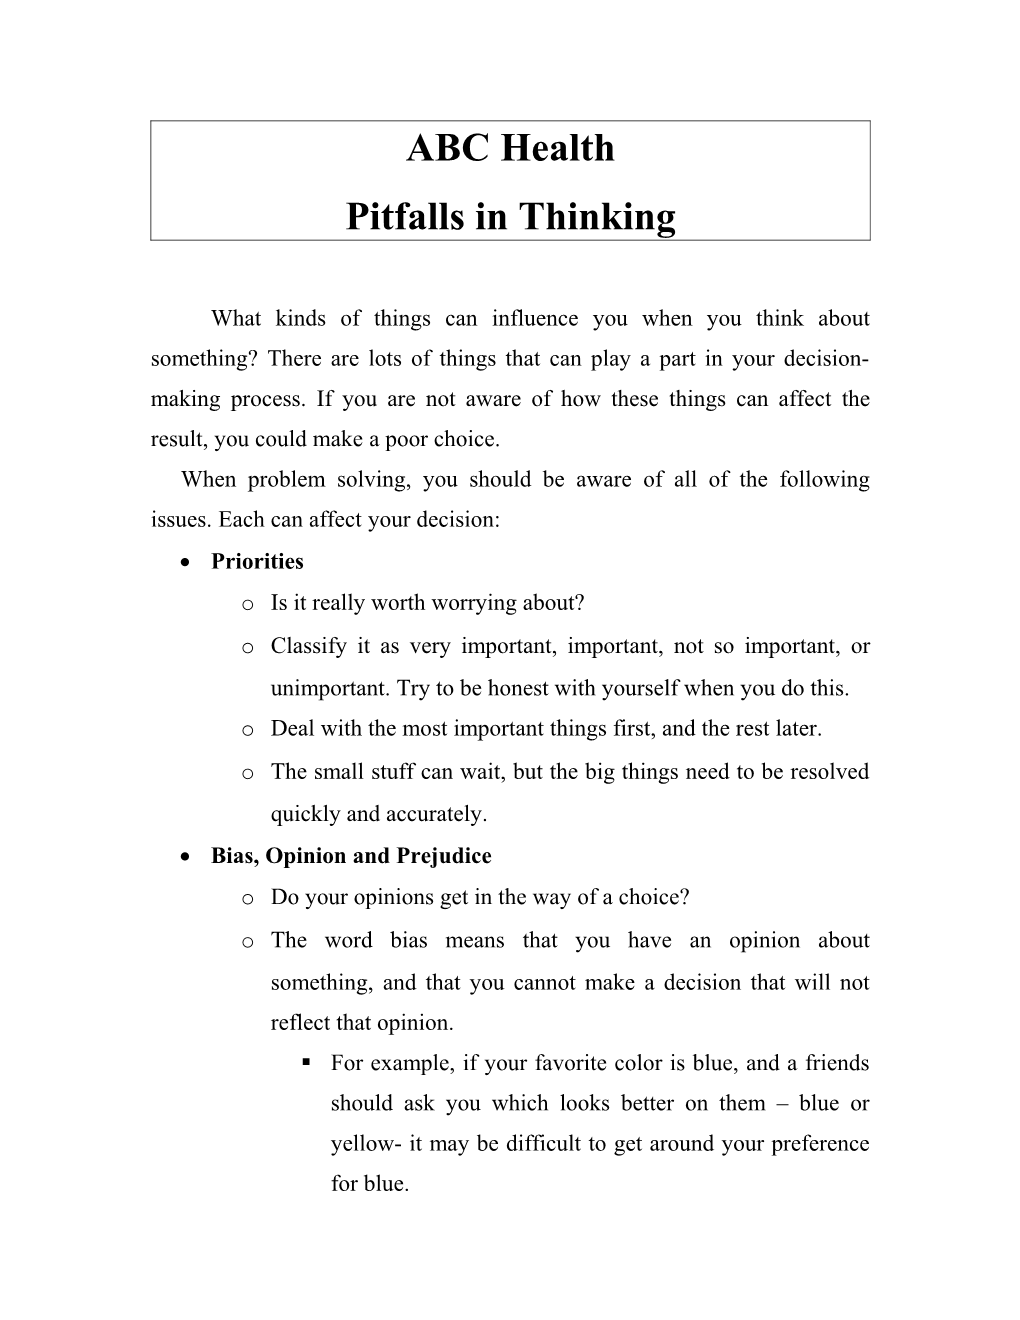 Pitfalls in Thinking